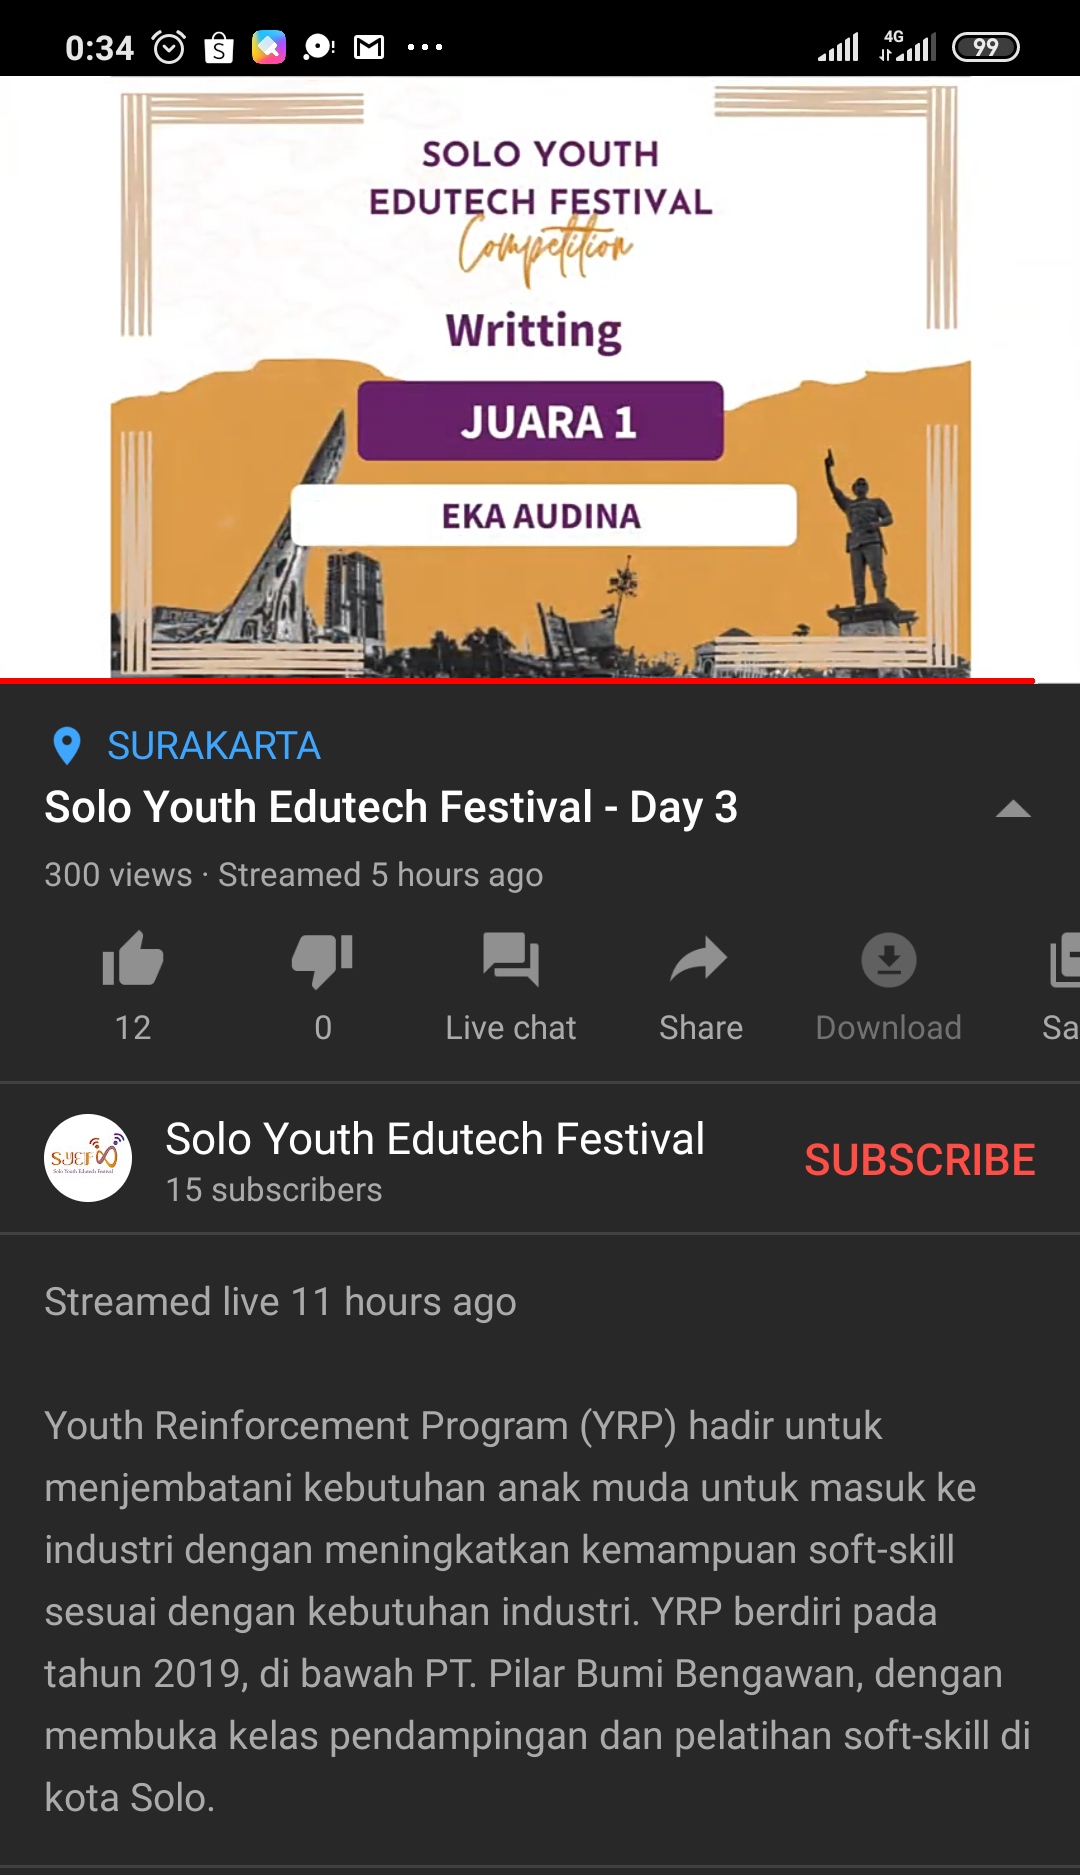 Foto Solo Youth Edutech Festival Competition 2021